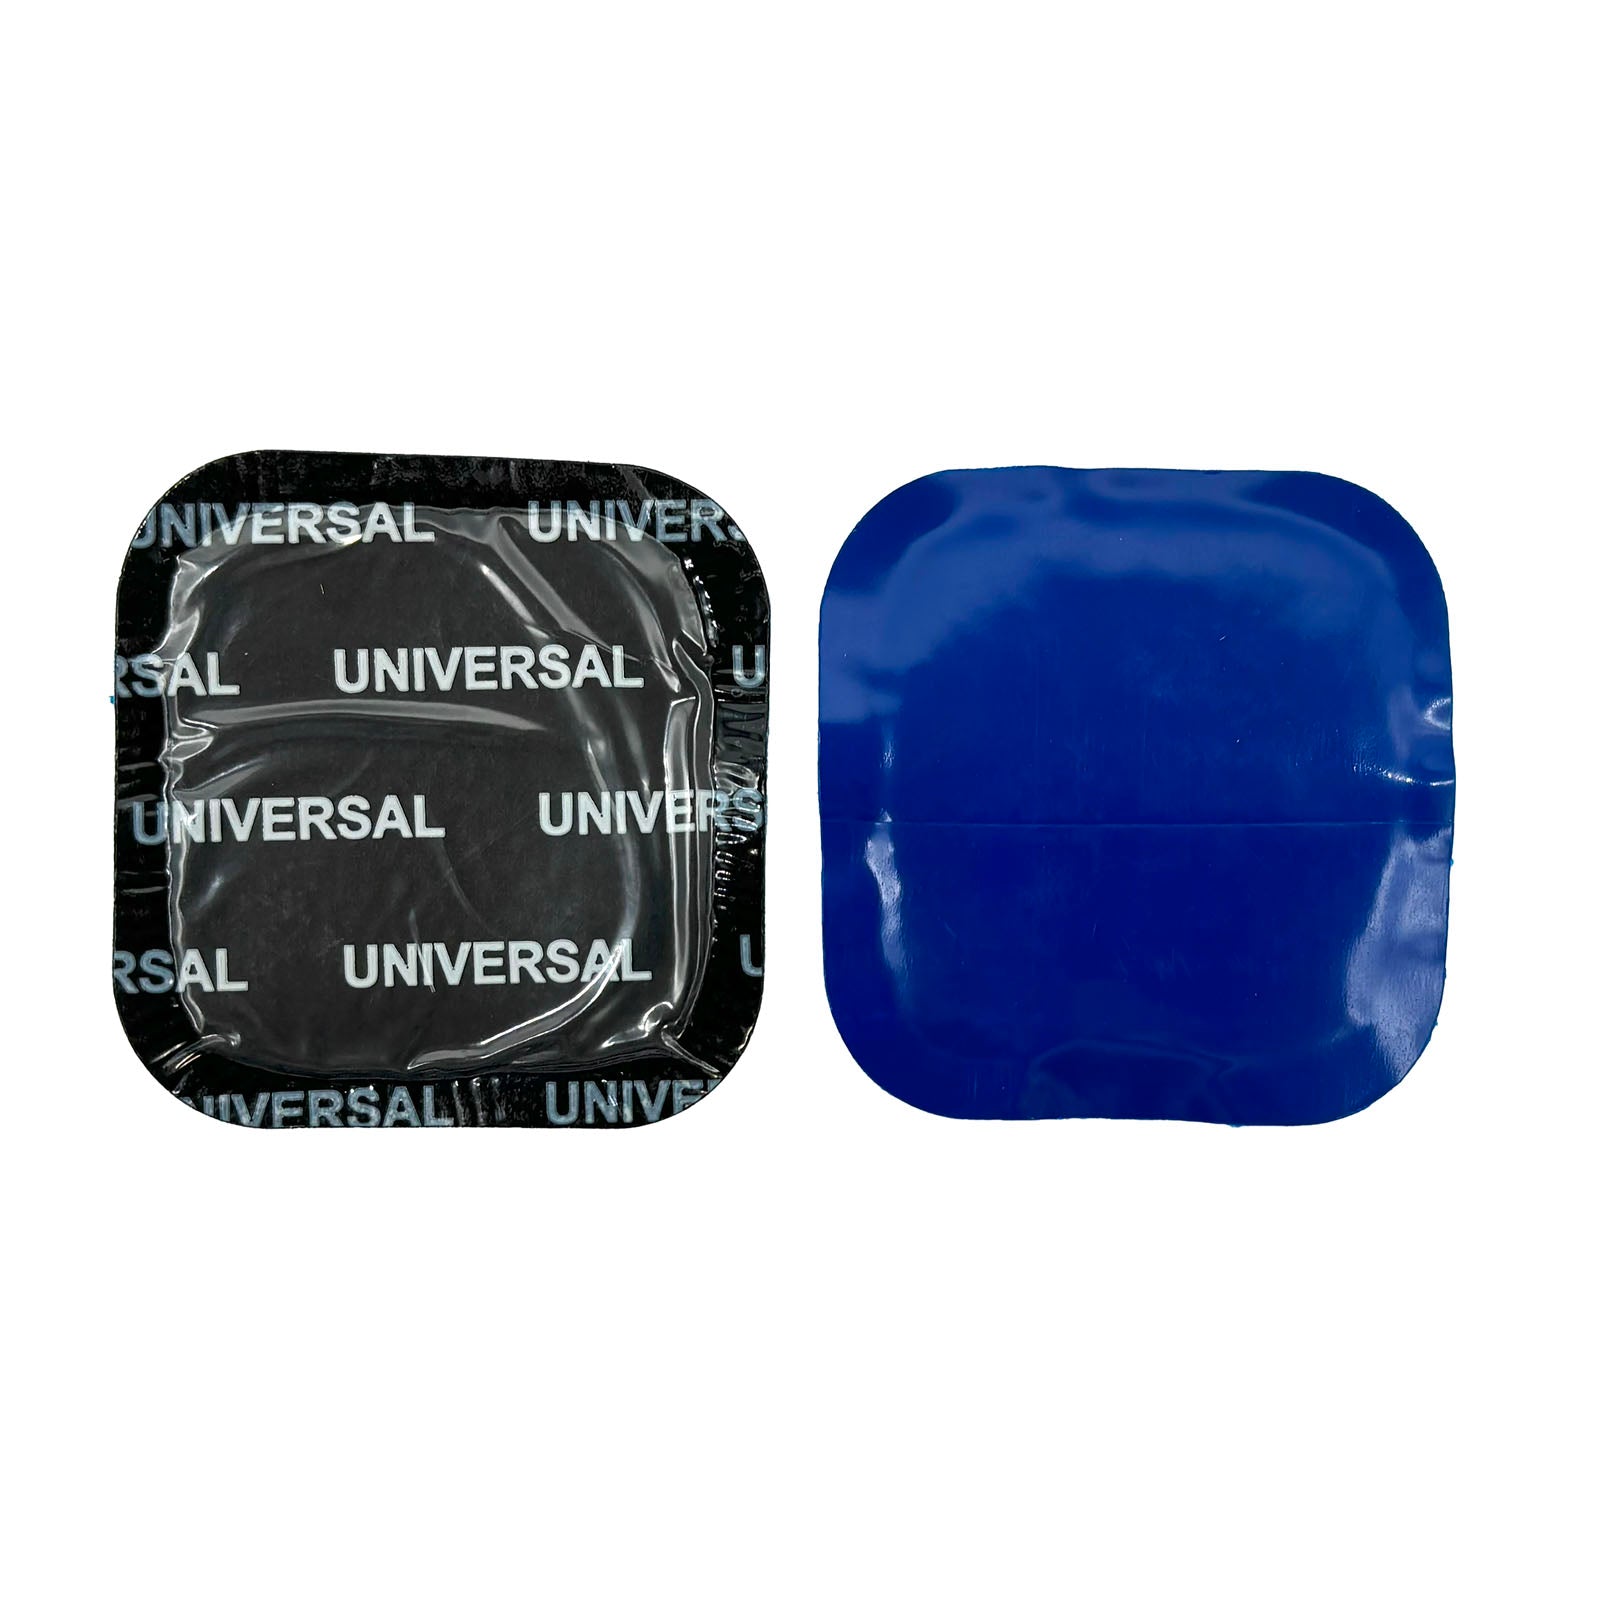 Kex UP-55P Universal Patch, 2-1/8" Square (200 unit bucket)